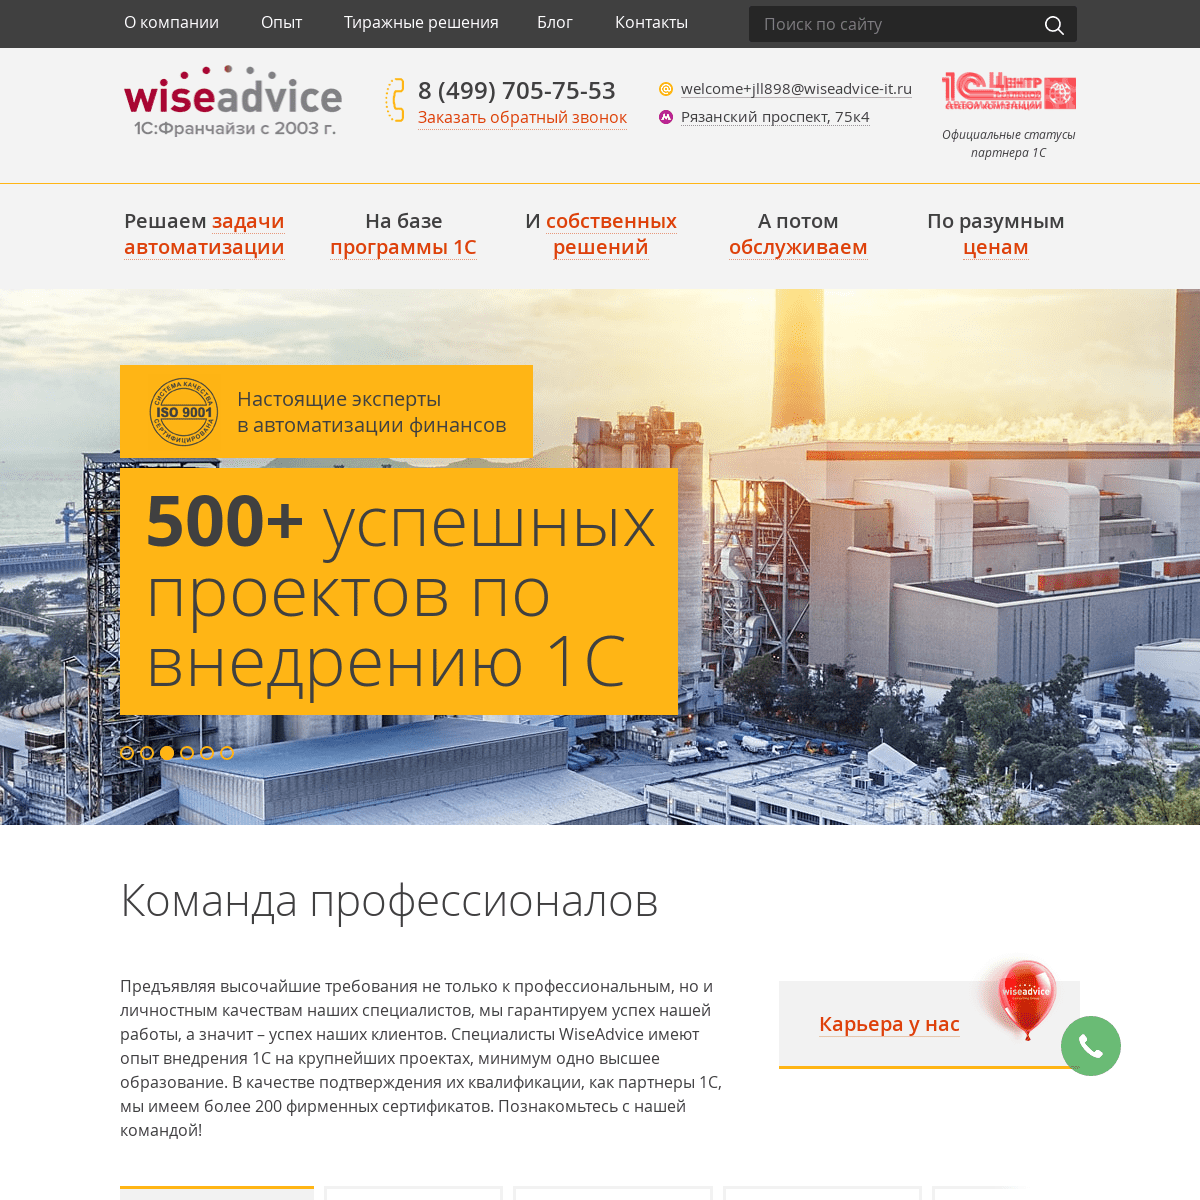 A complete backup of wiseadvice-it.ru